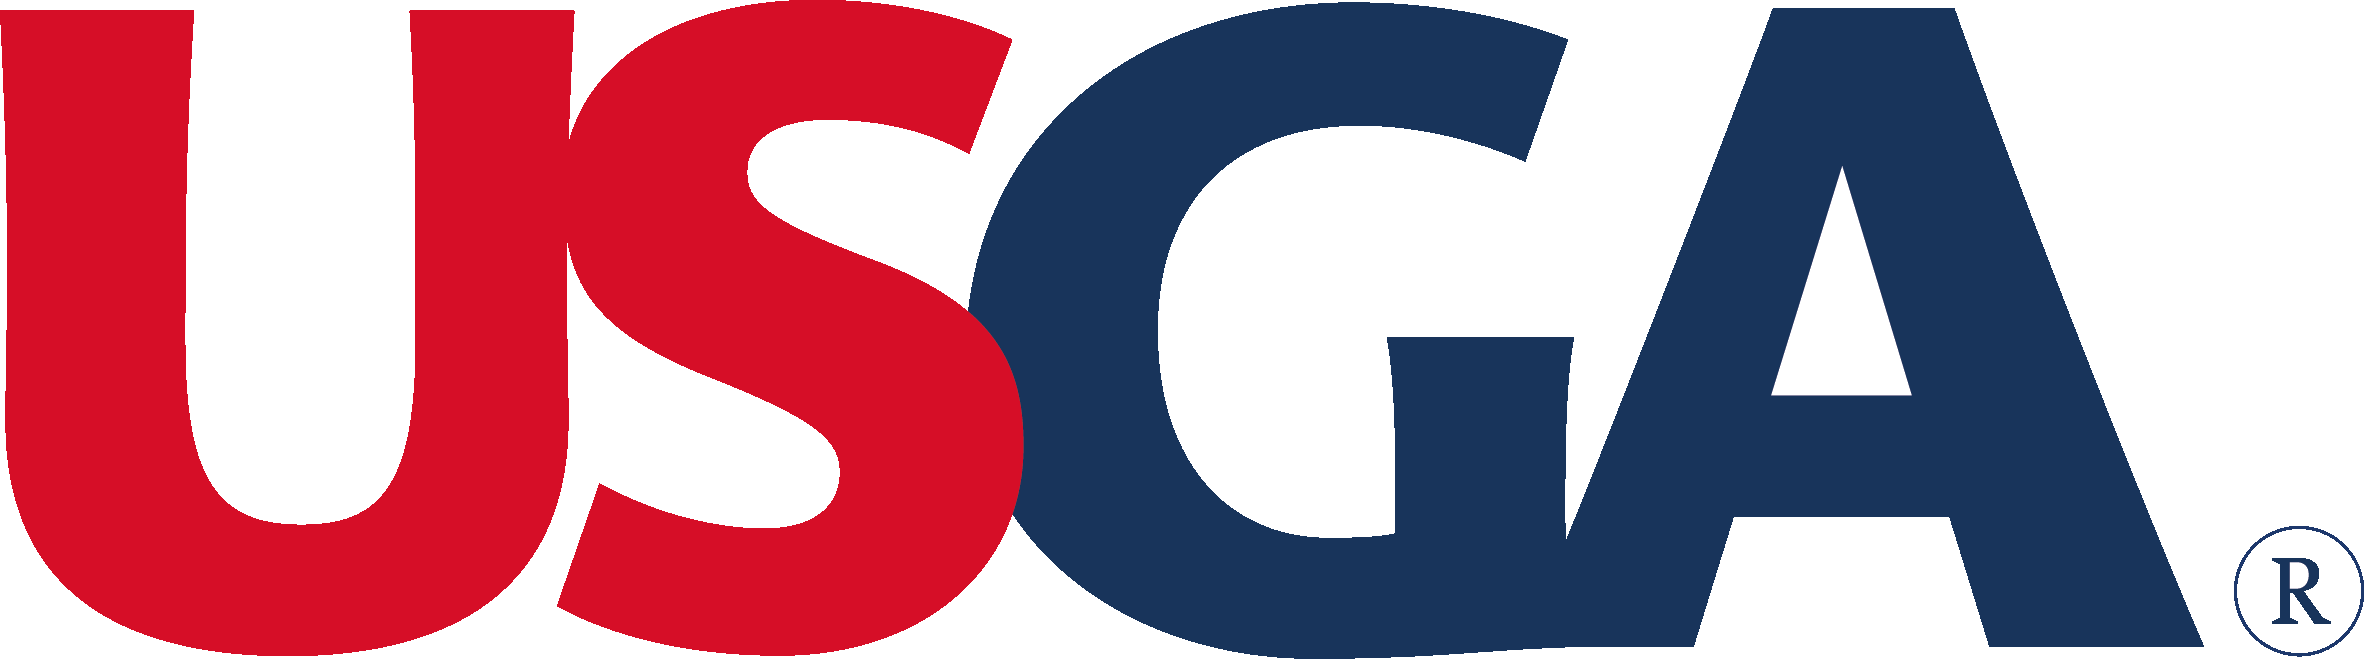 USGA United States Golf Association logo